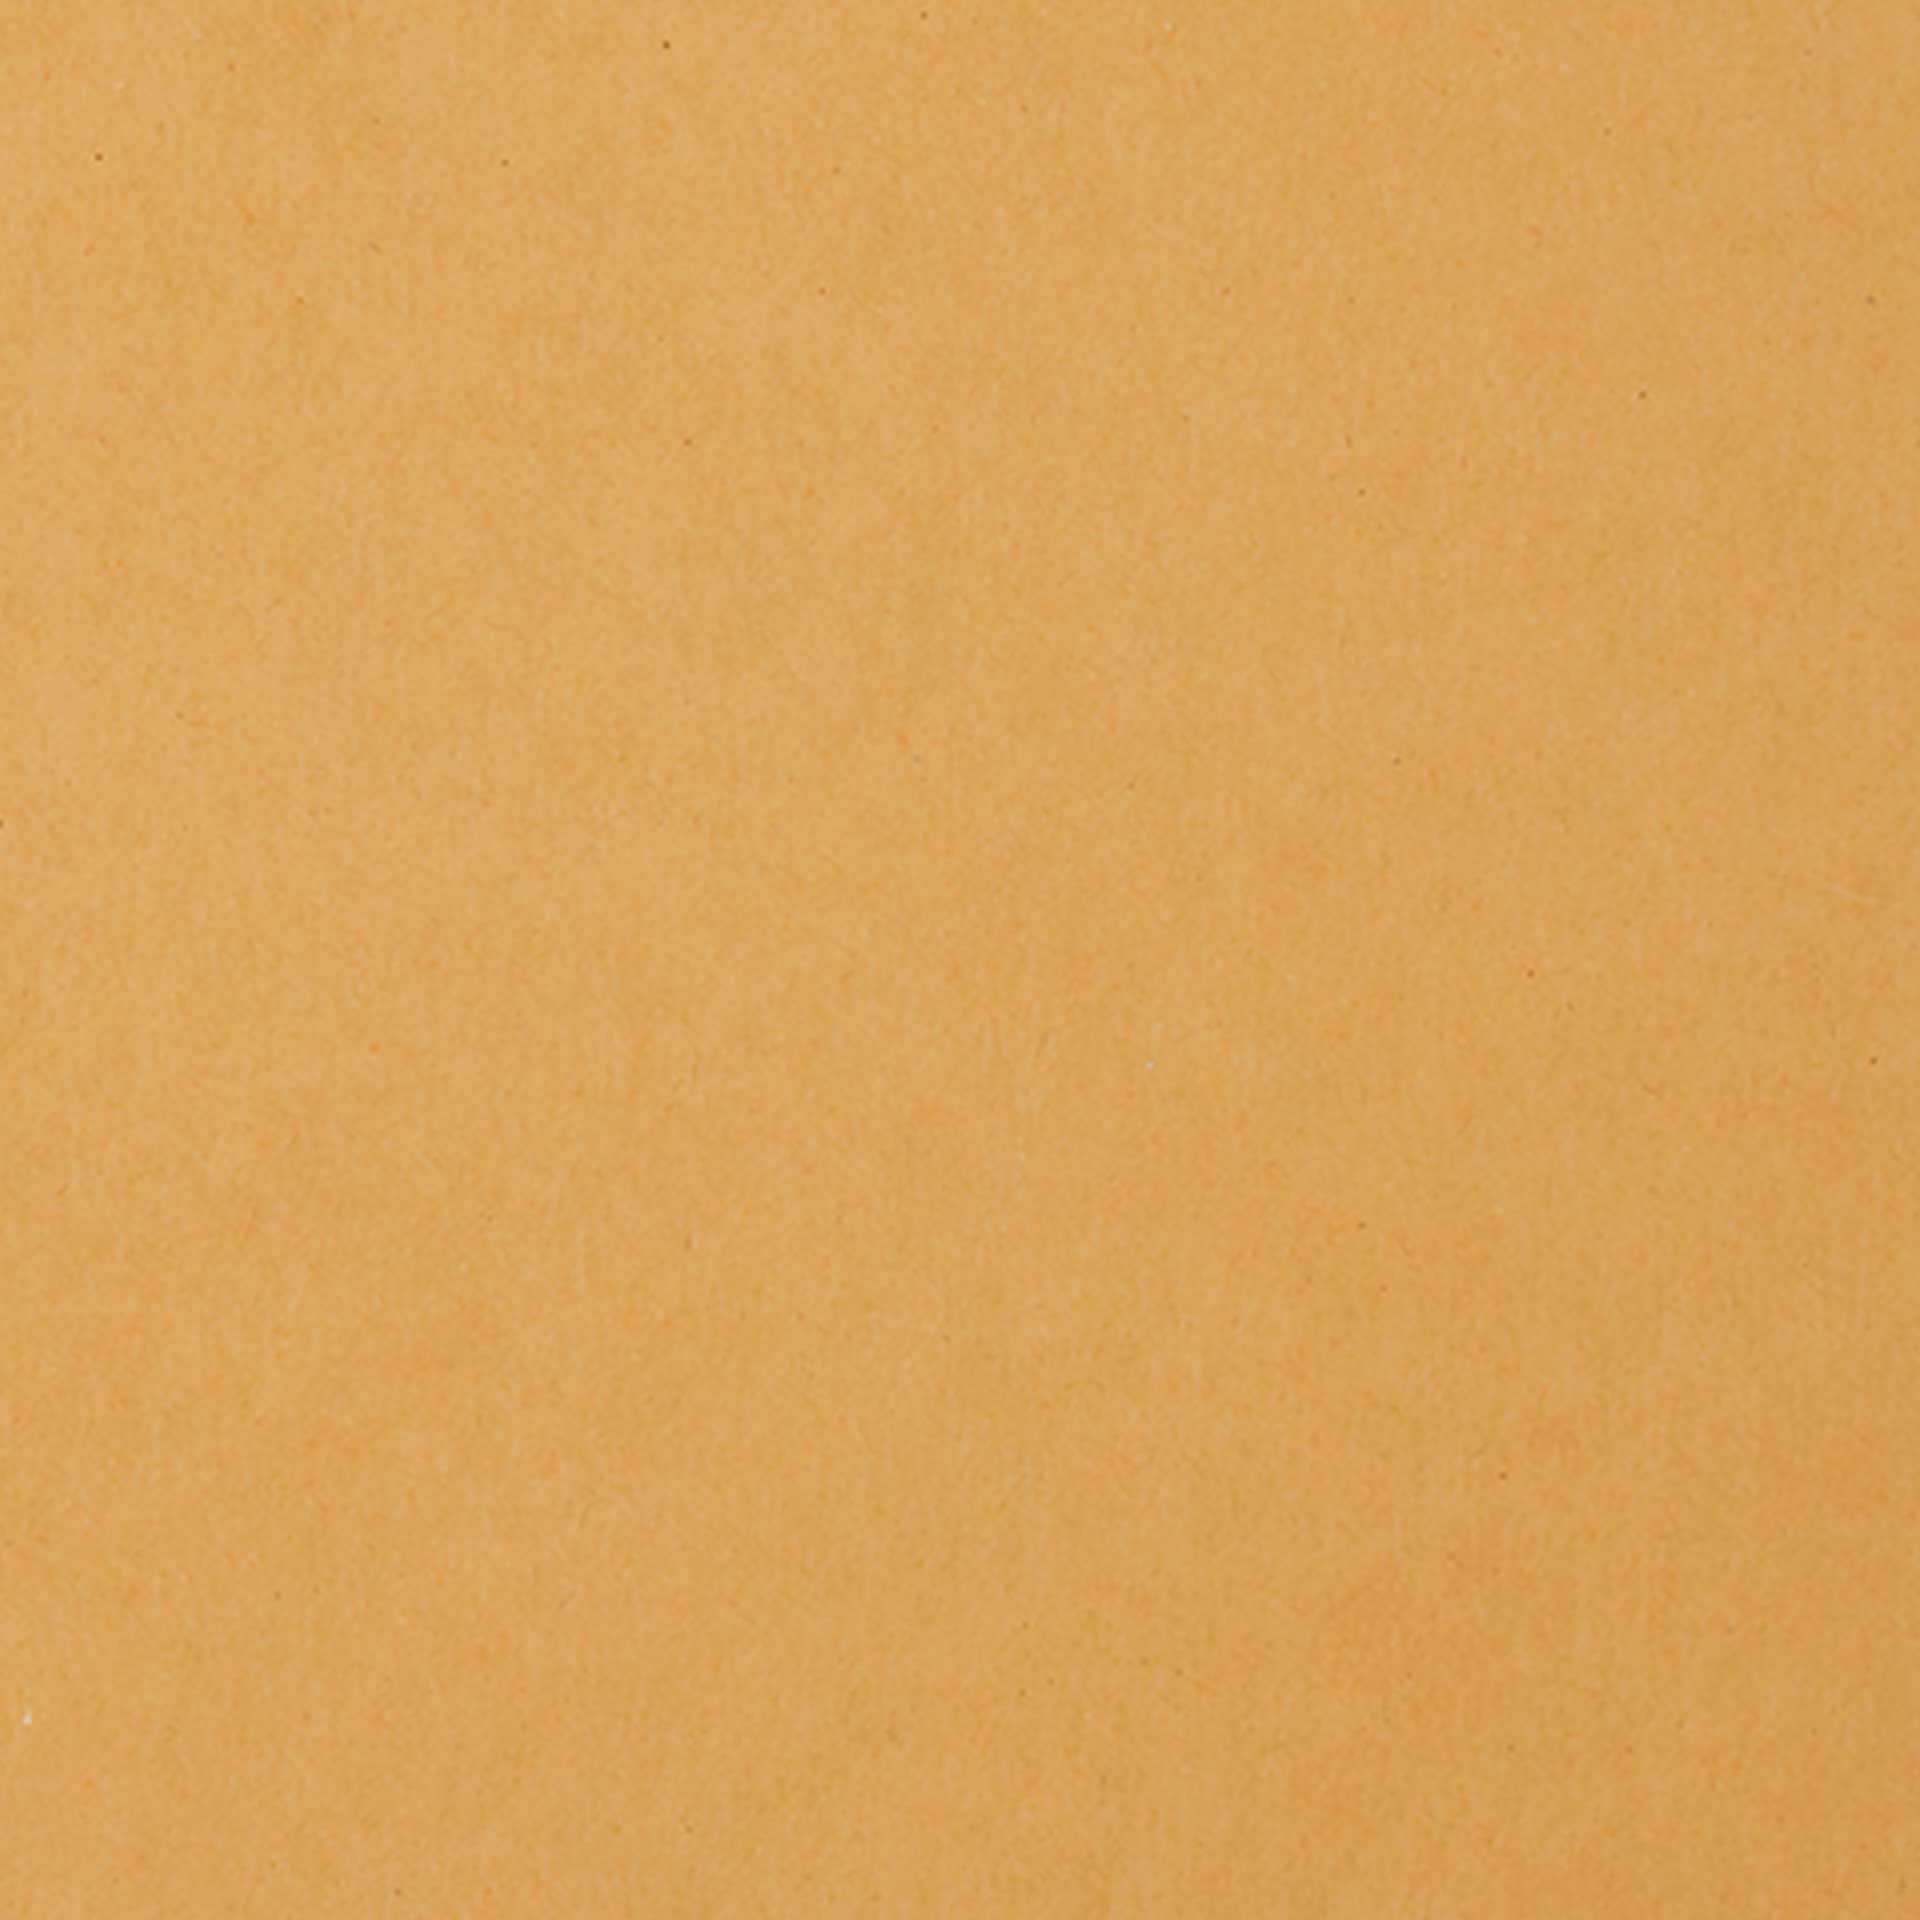 Closeup of a tan book cover